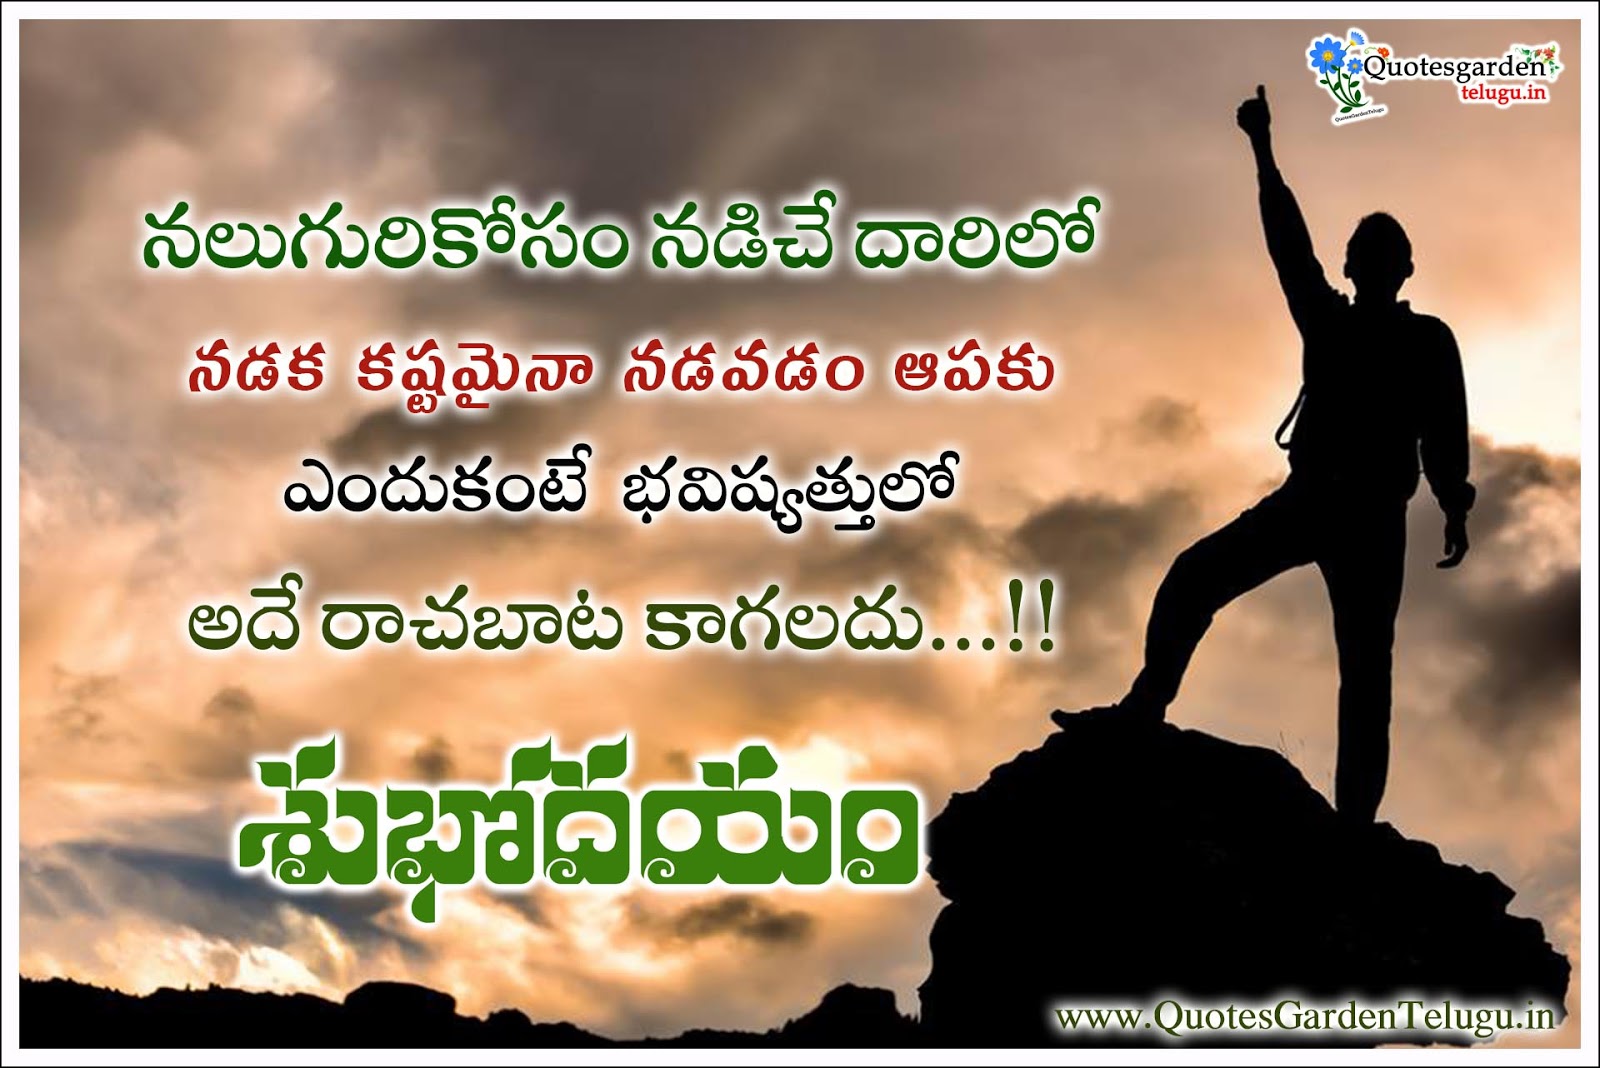  Good  morning  Telugu  Quotations  with Latest Inspirational 